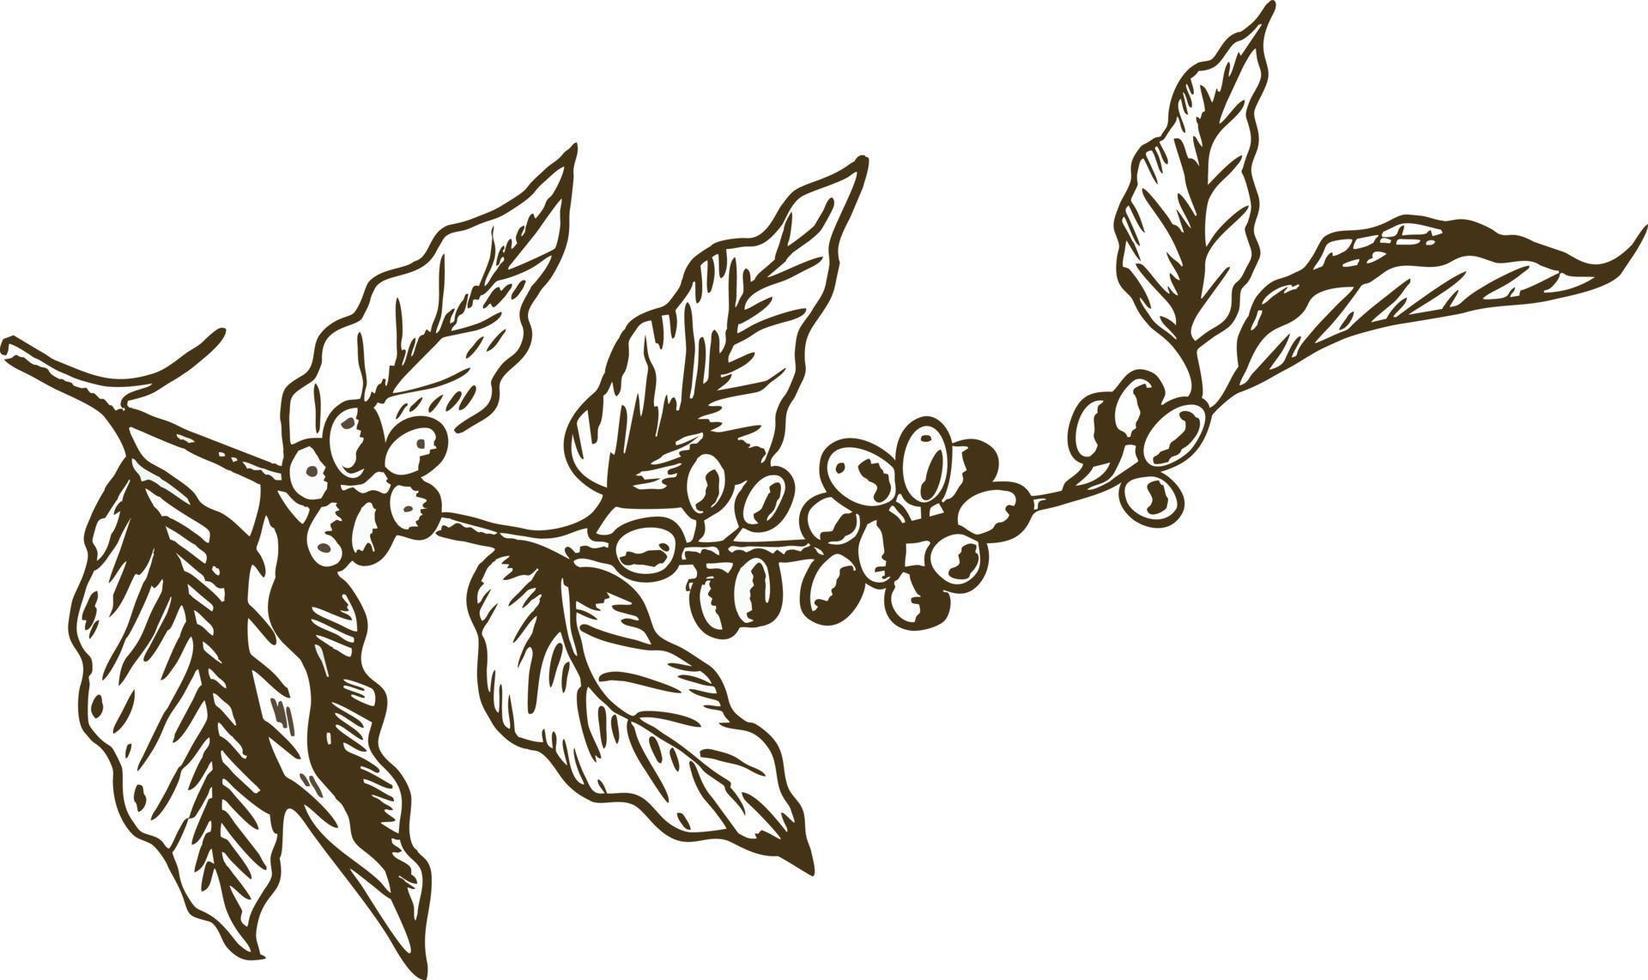 árbol de café con frijoles coffea boceto e imagen incolora, hojas y granos de café planta orgánica vector